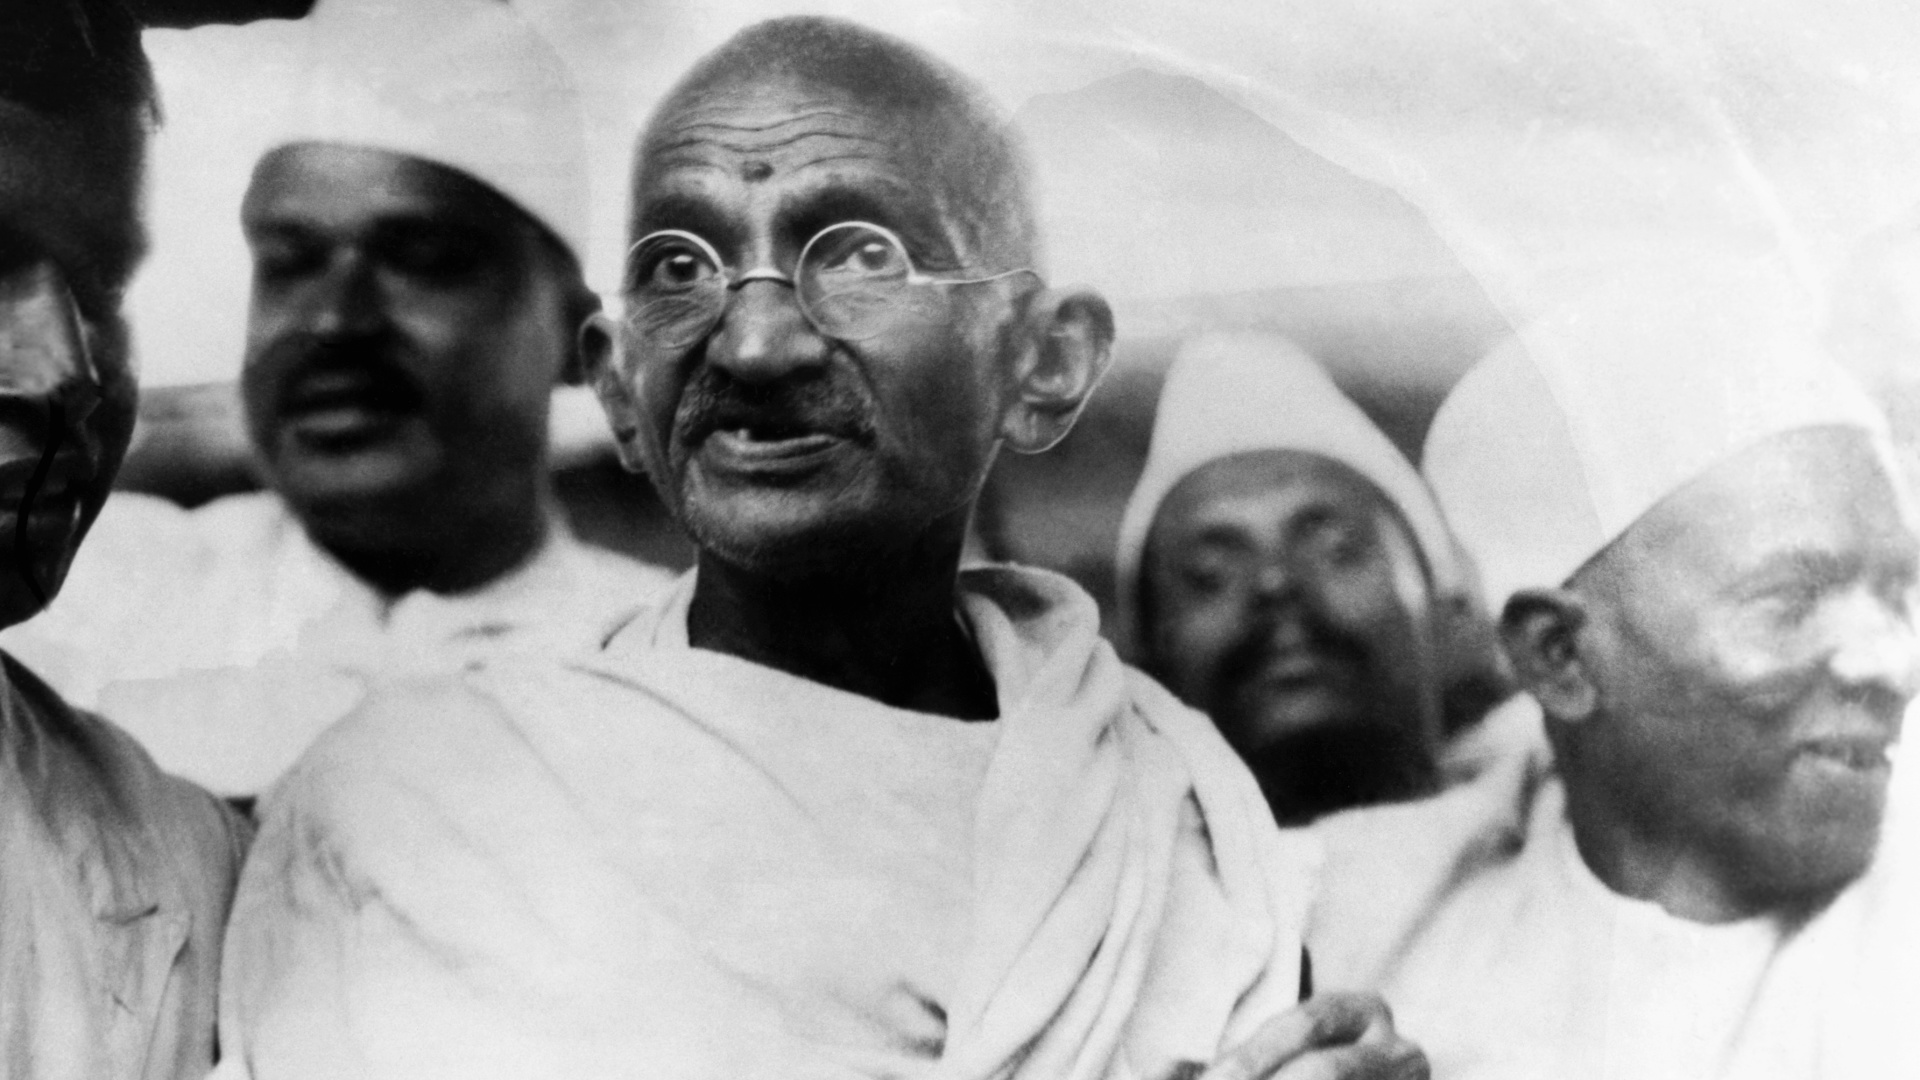 The assassination of Gandhi